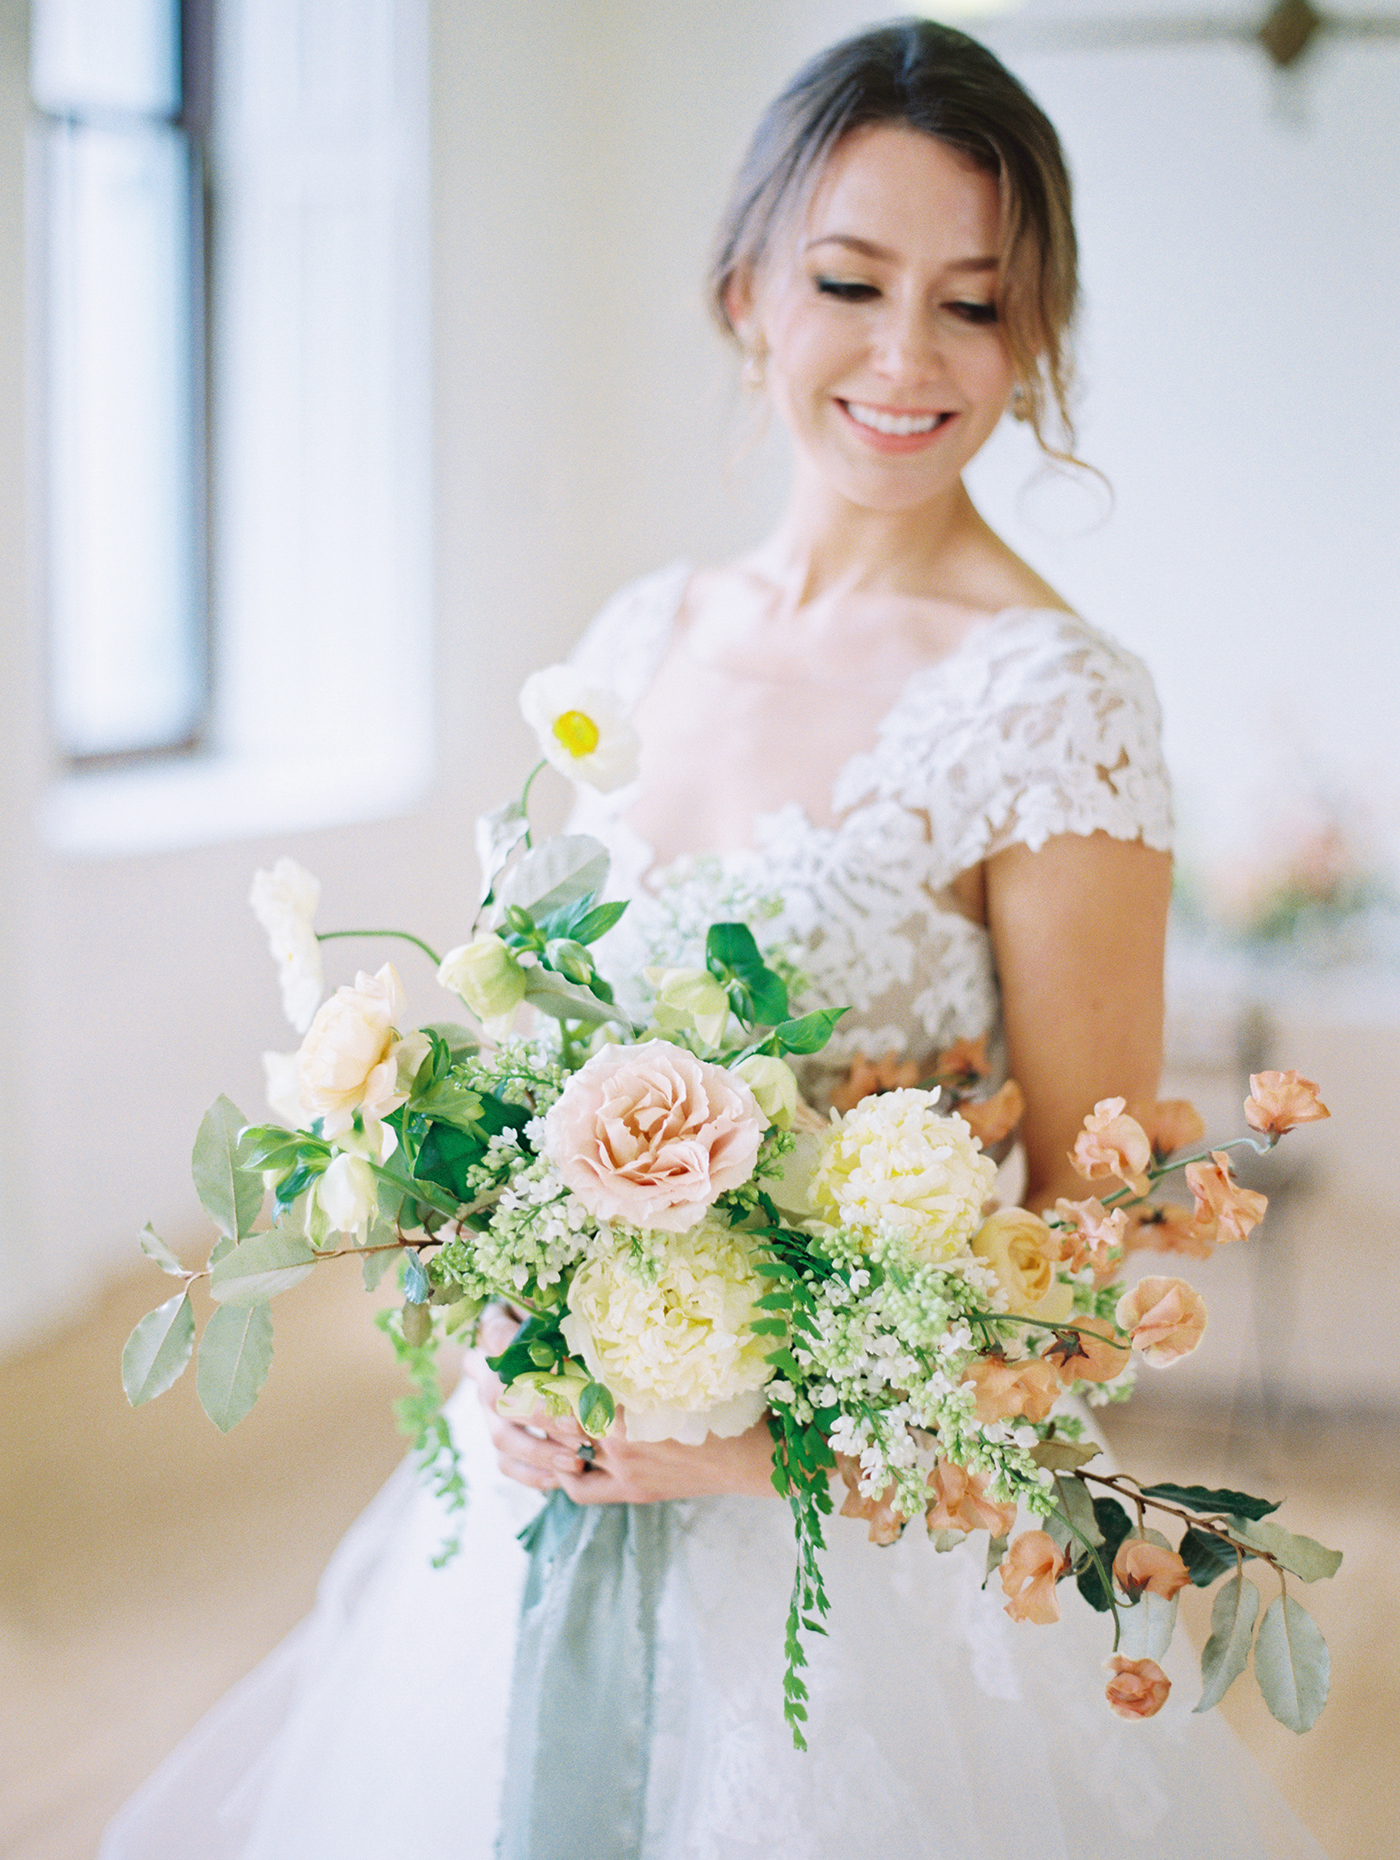 Custom Wedding Stationery Designer - Sarah Ann Design - Emerald and Jade